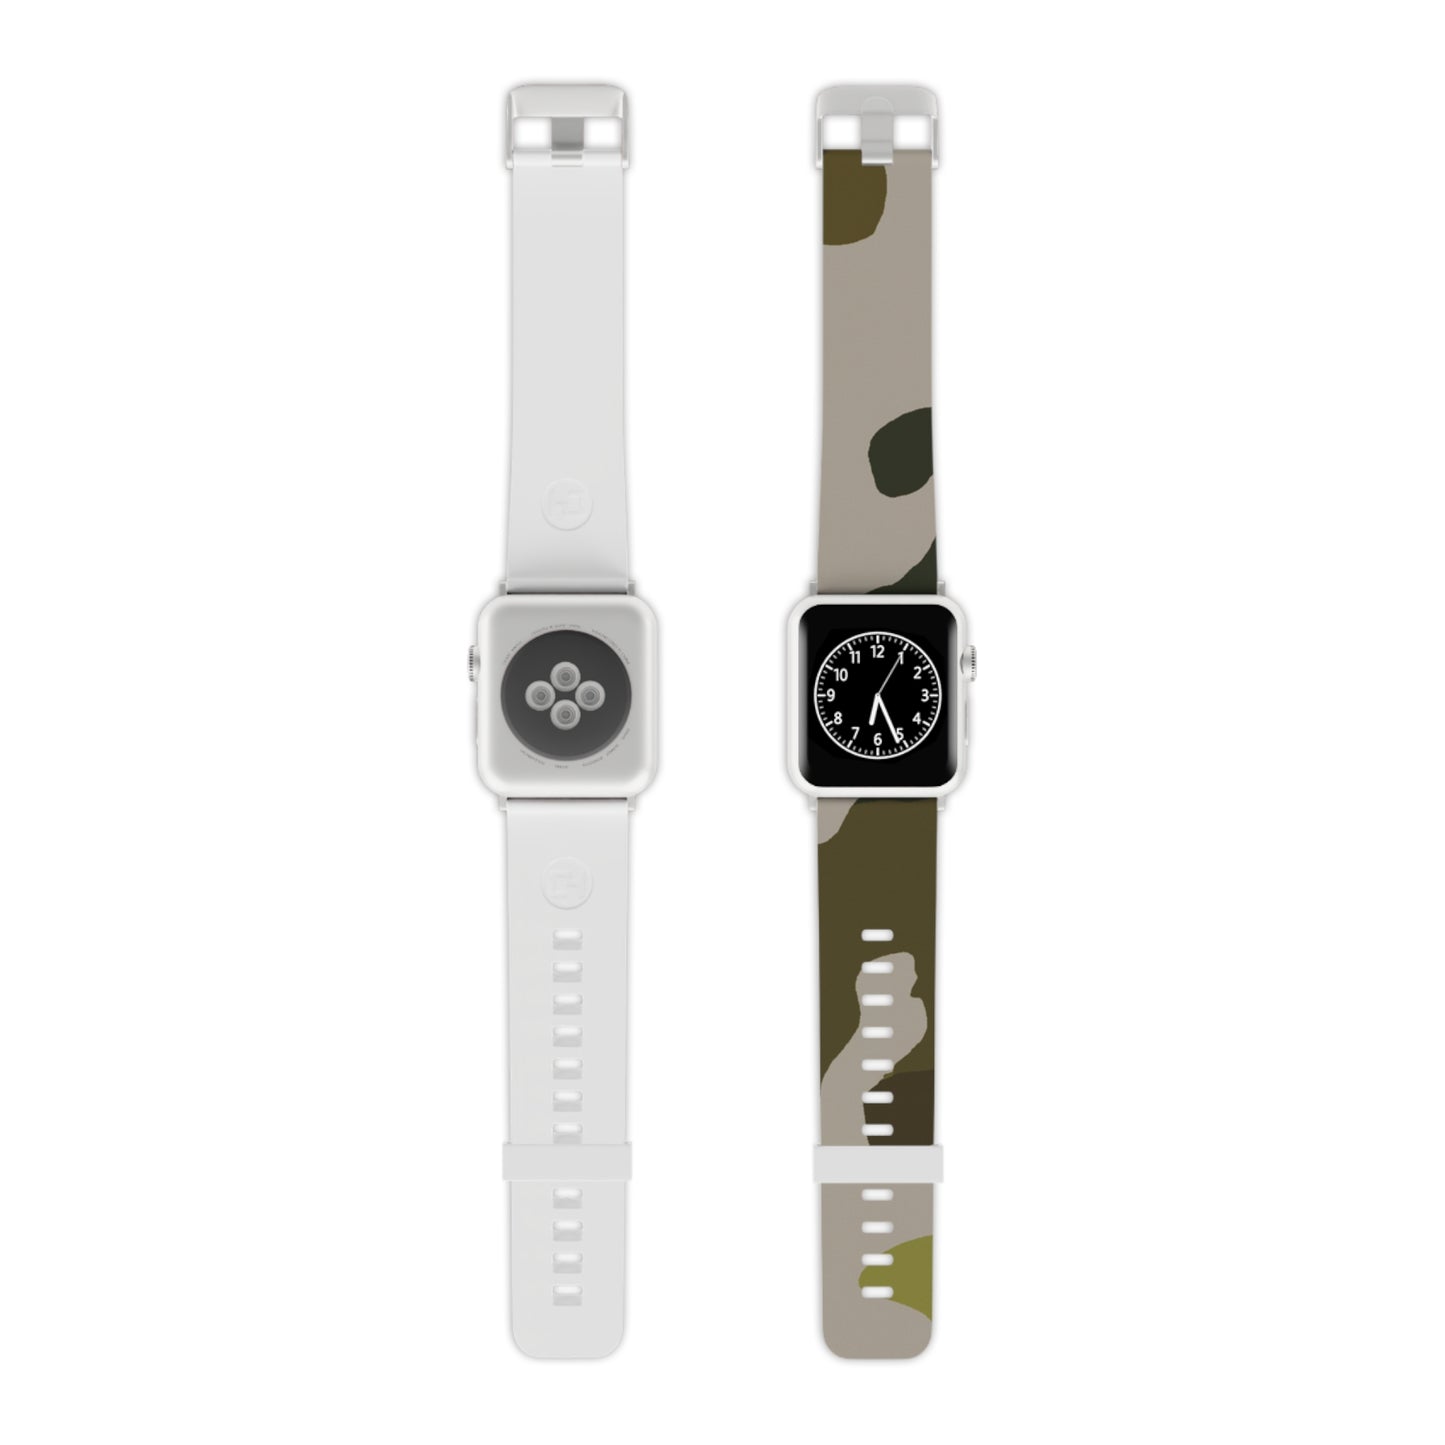 Benjamin Angler - Camouflage Apple Wrist Watch Band